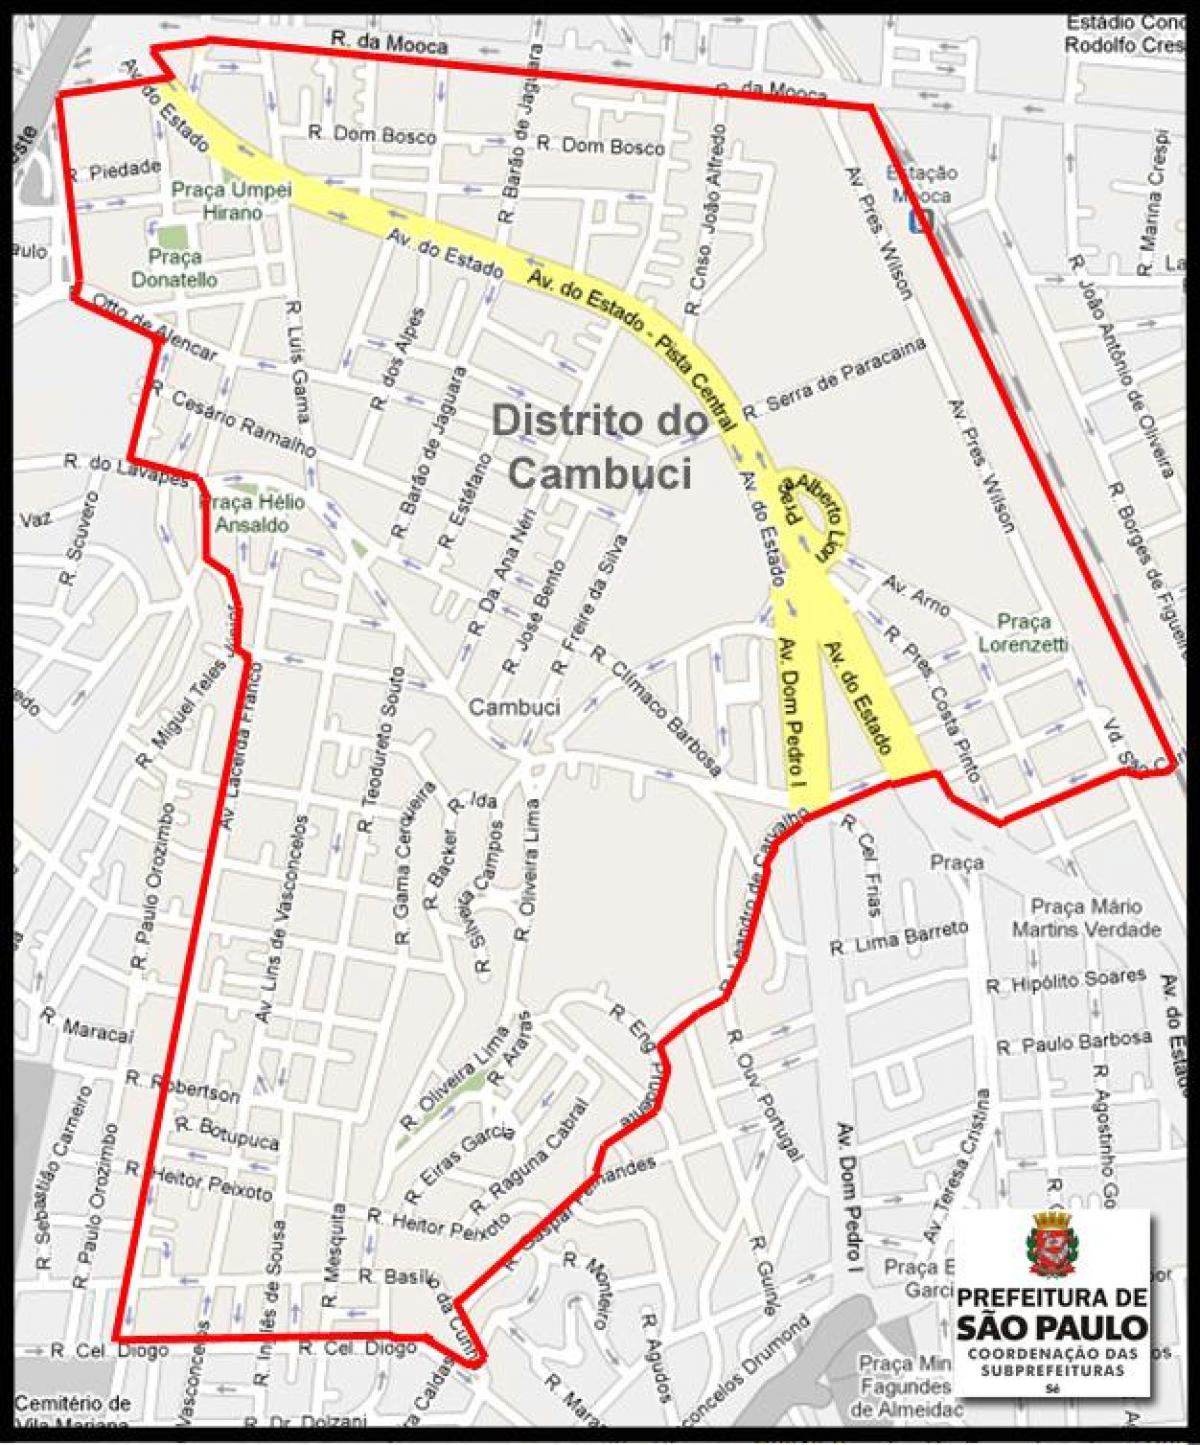 Kort over Cambuci São Paulo